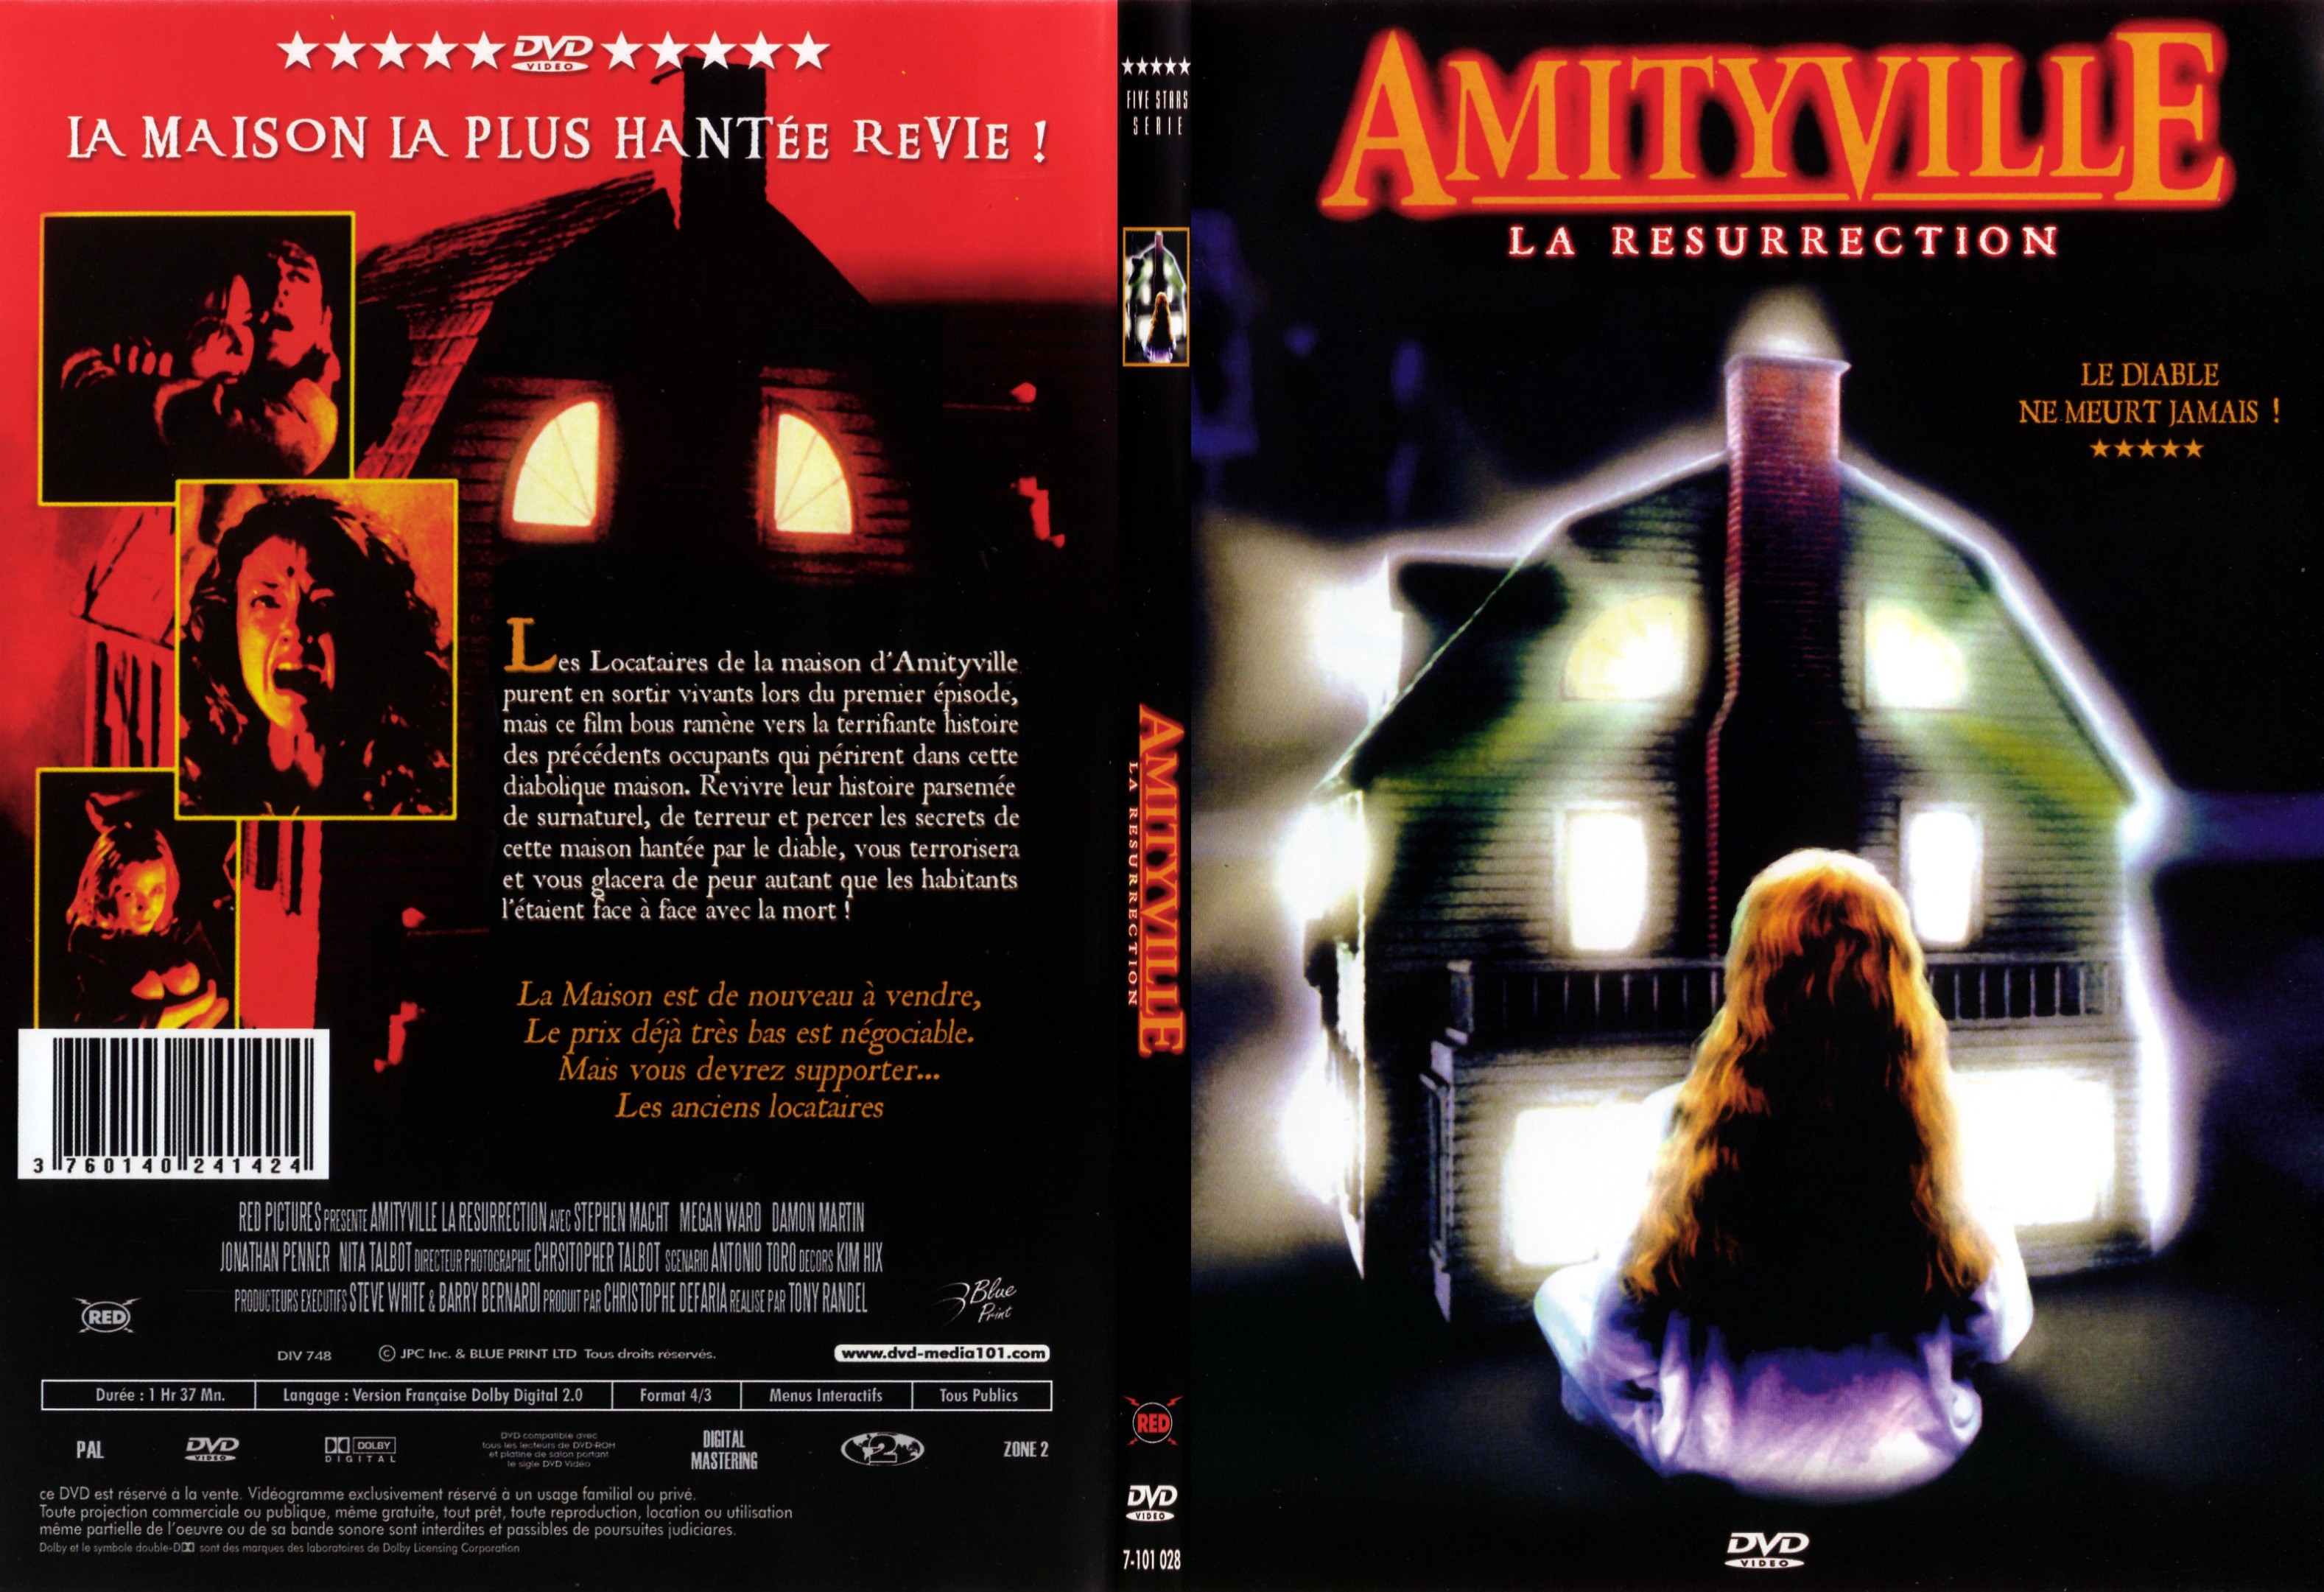 Jaquette DVD Amityville - La ressurection - SLIM